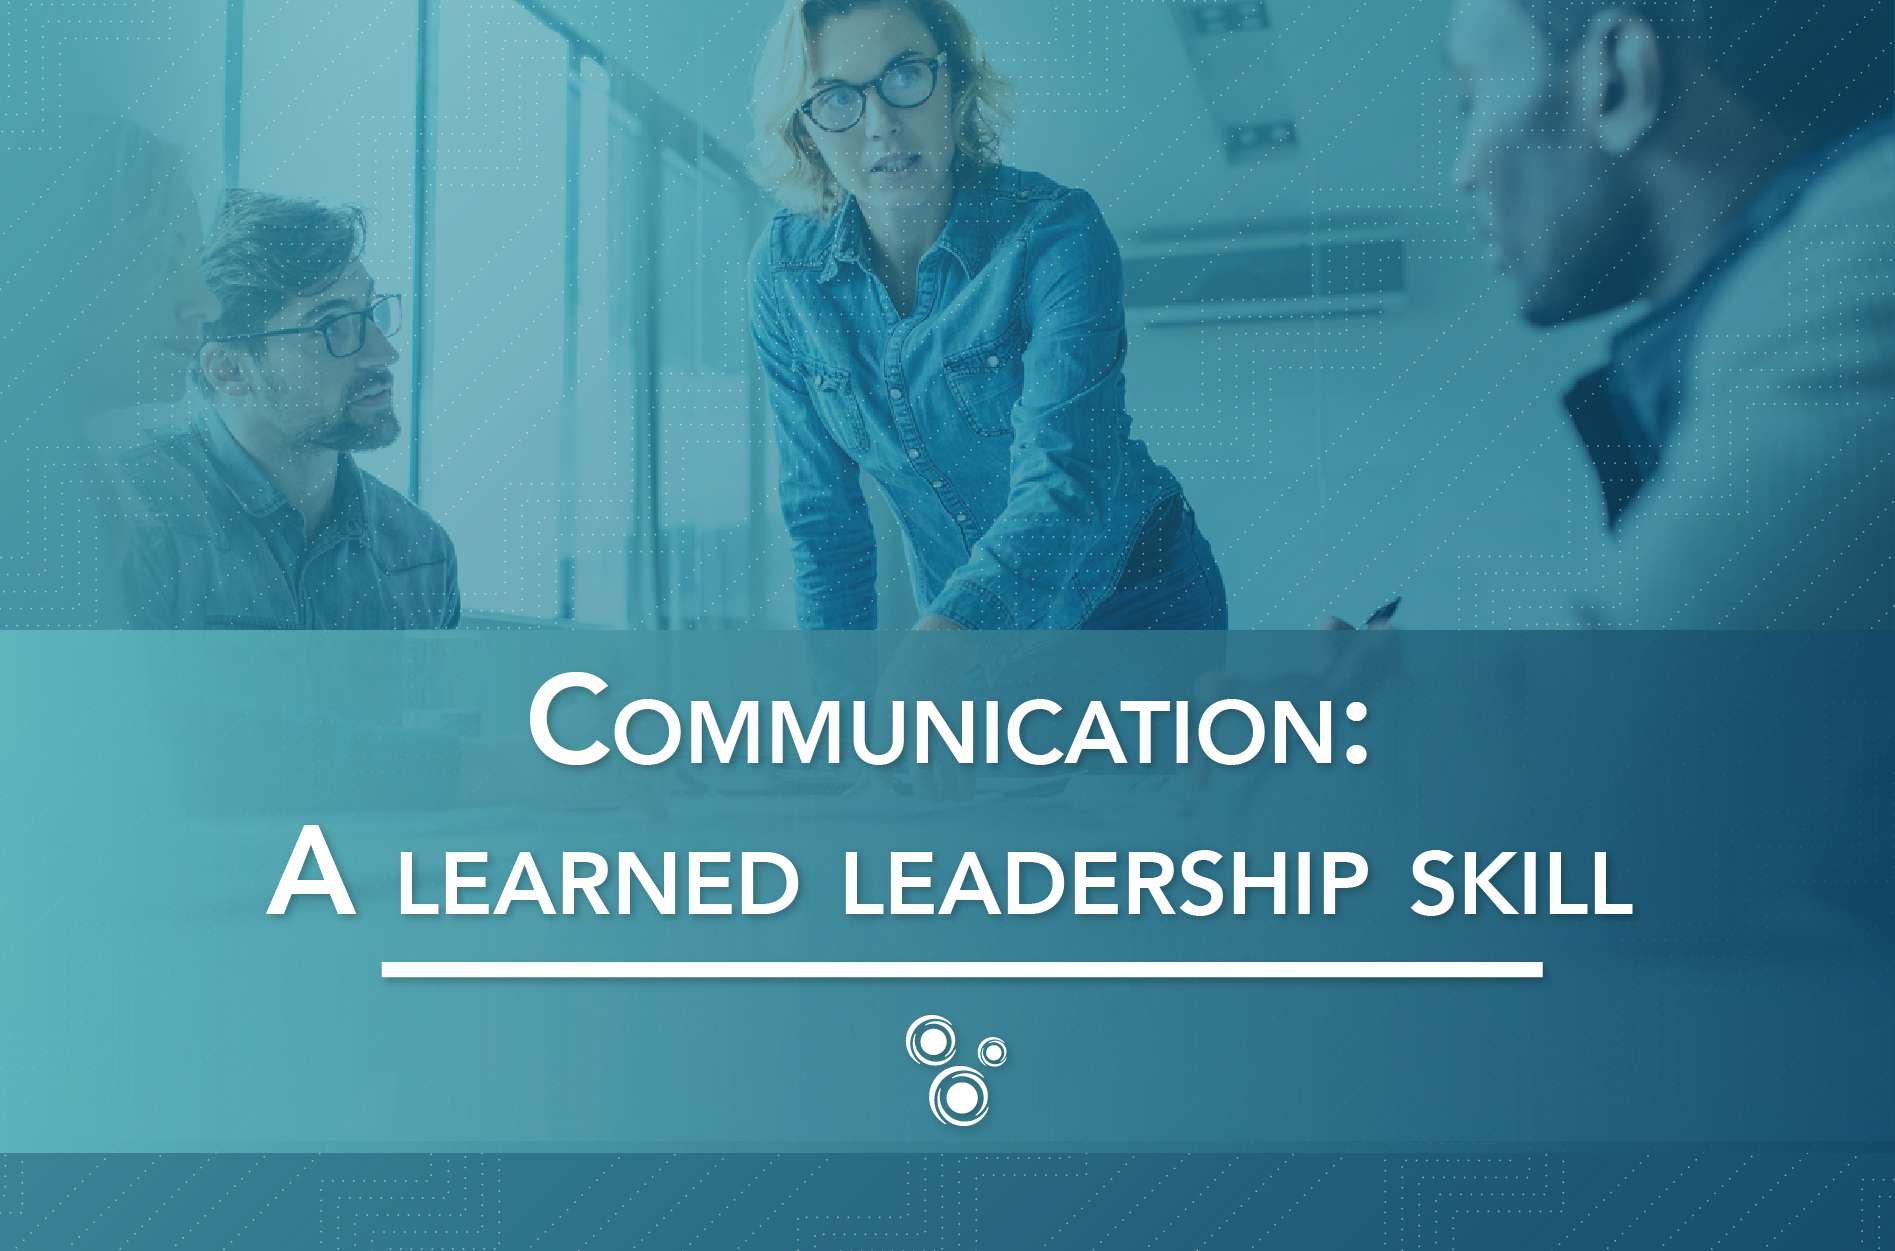 Communication: A learned leadership skill